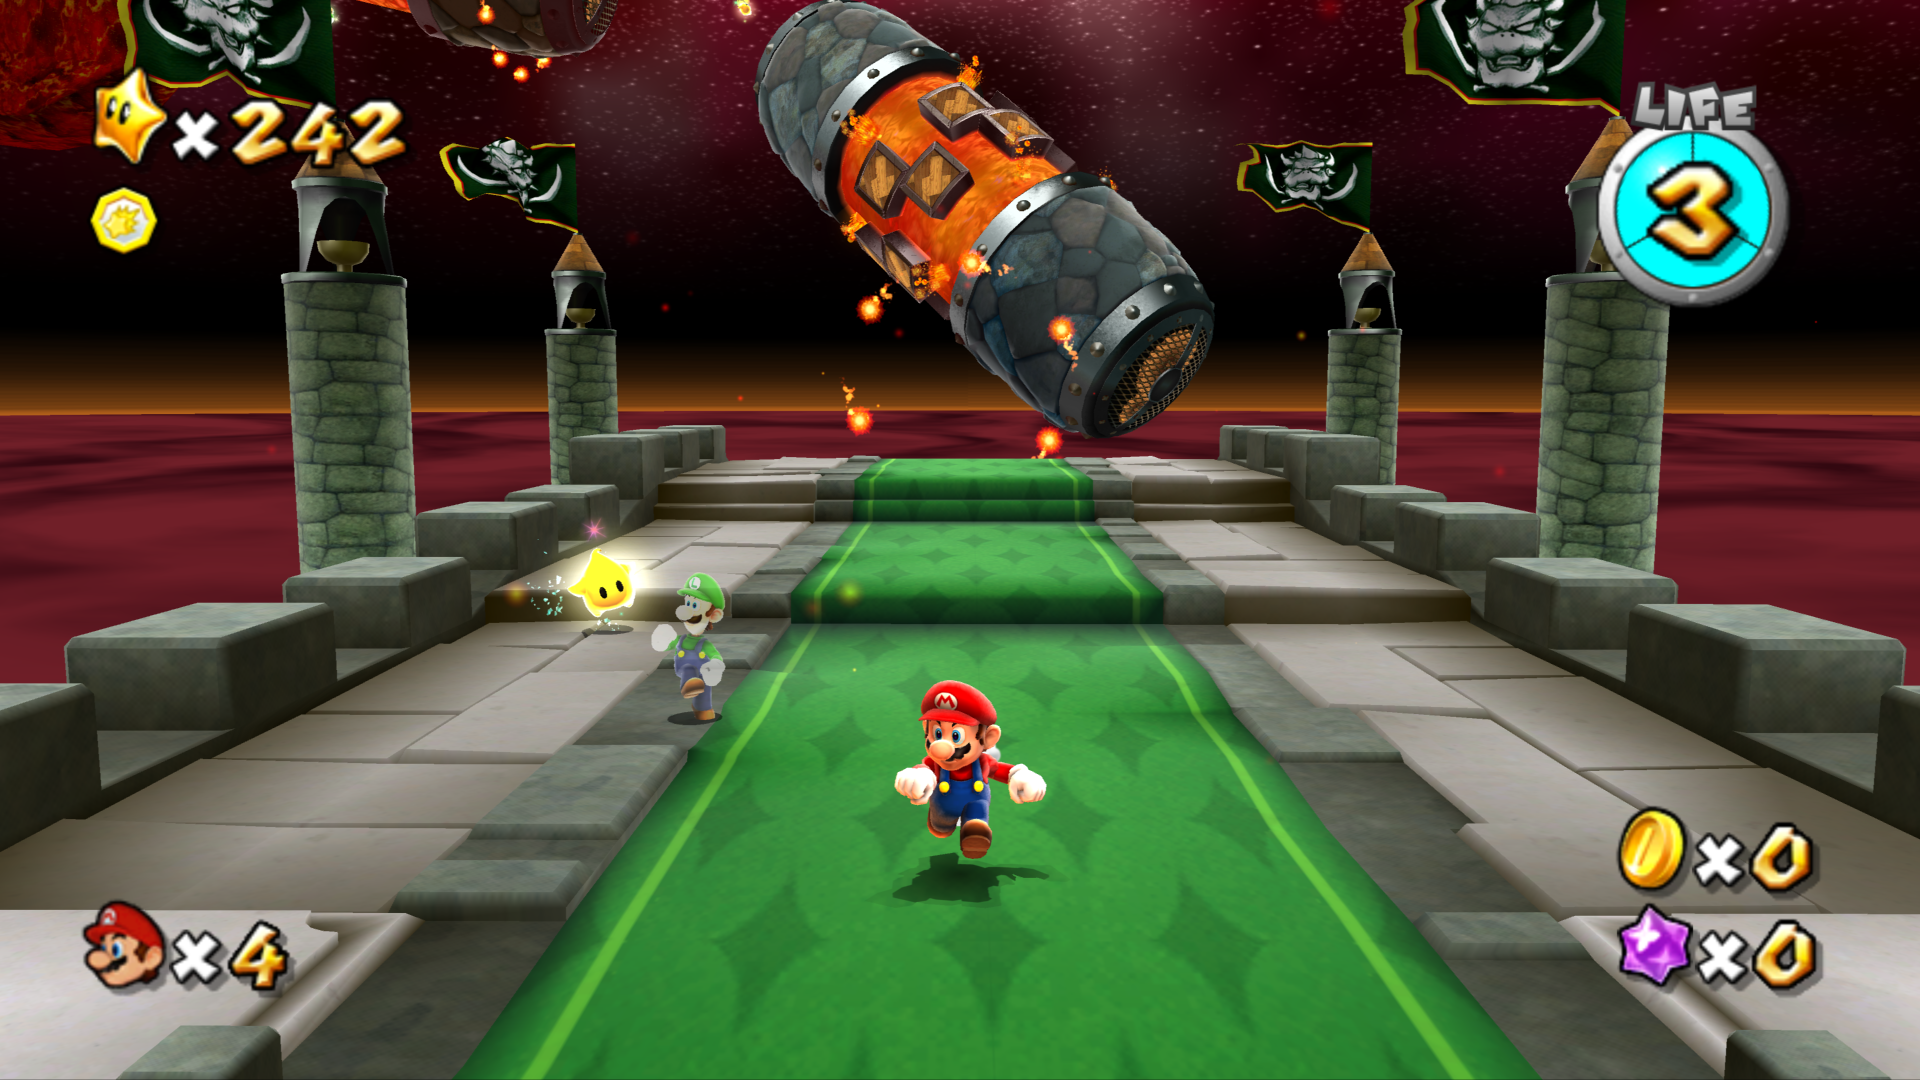 Video Game Super Mario Galaxy 2 1920x1080